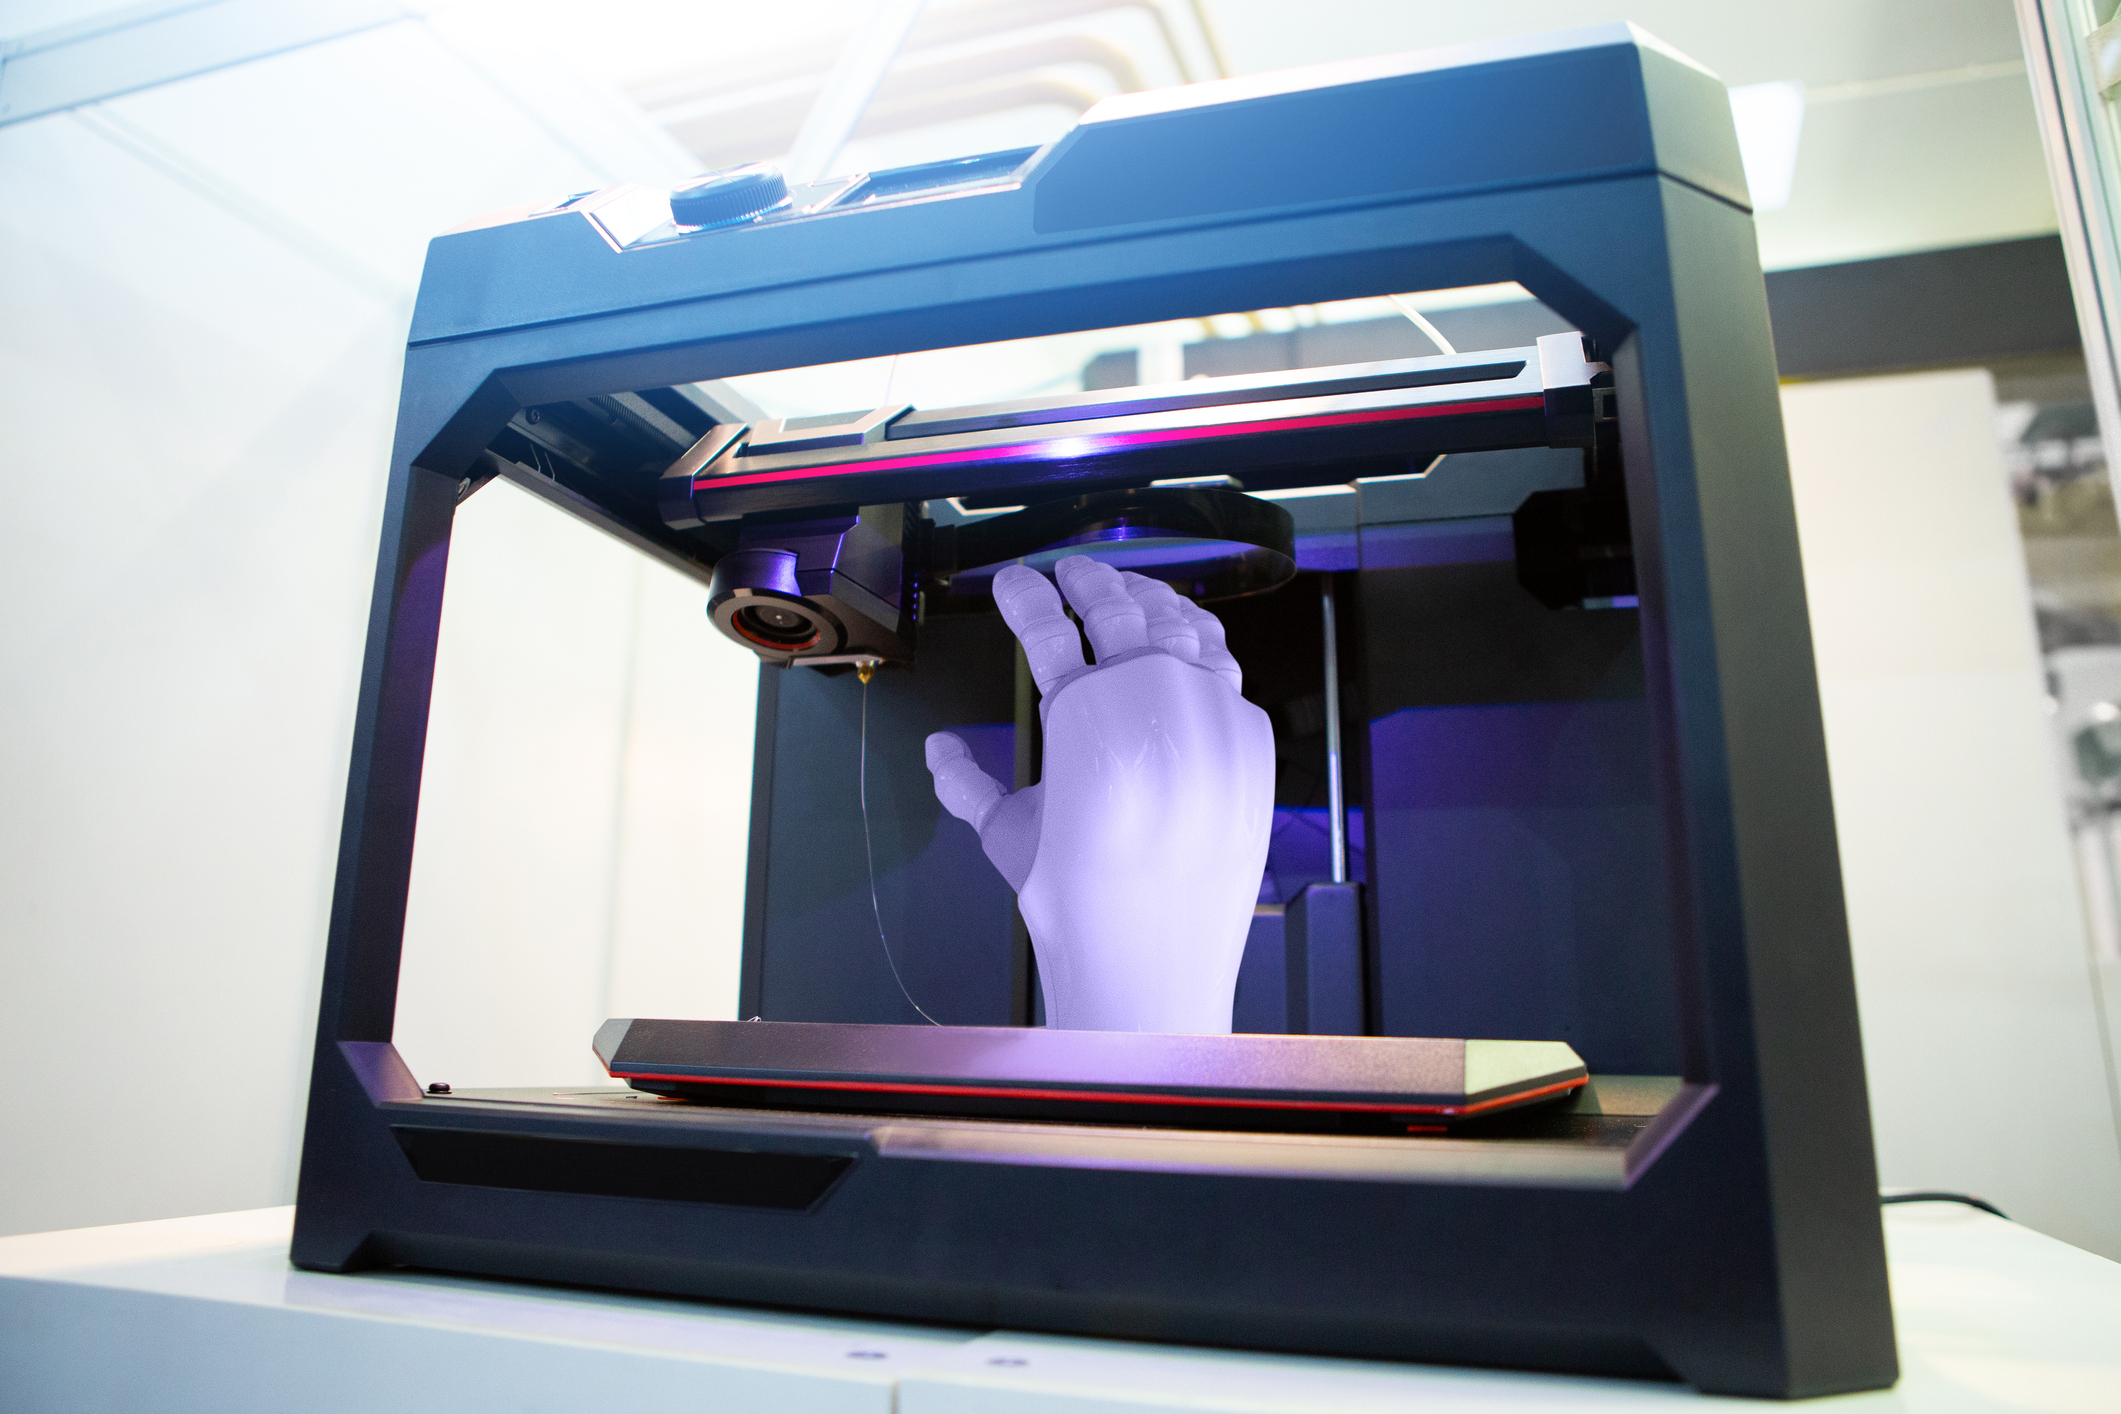 3d printed prosthetics